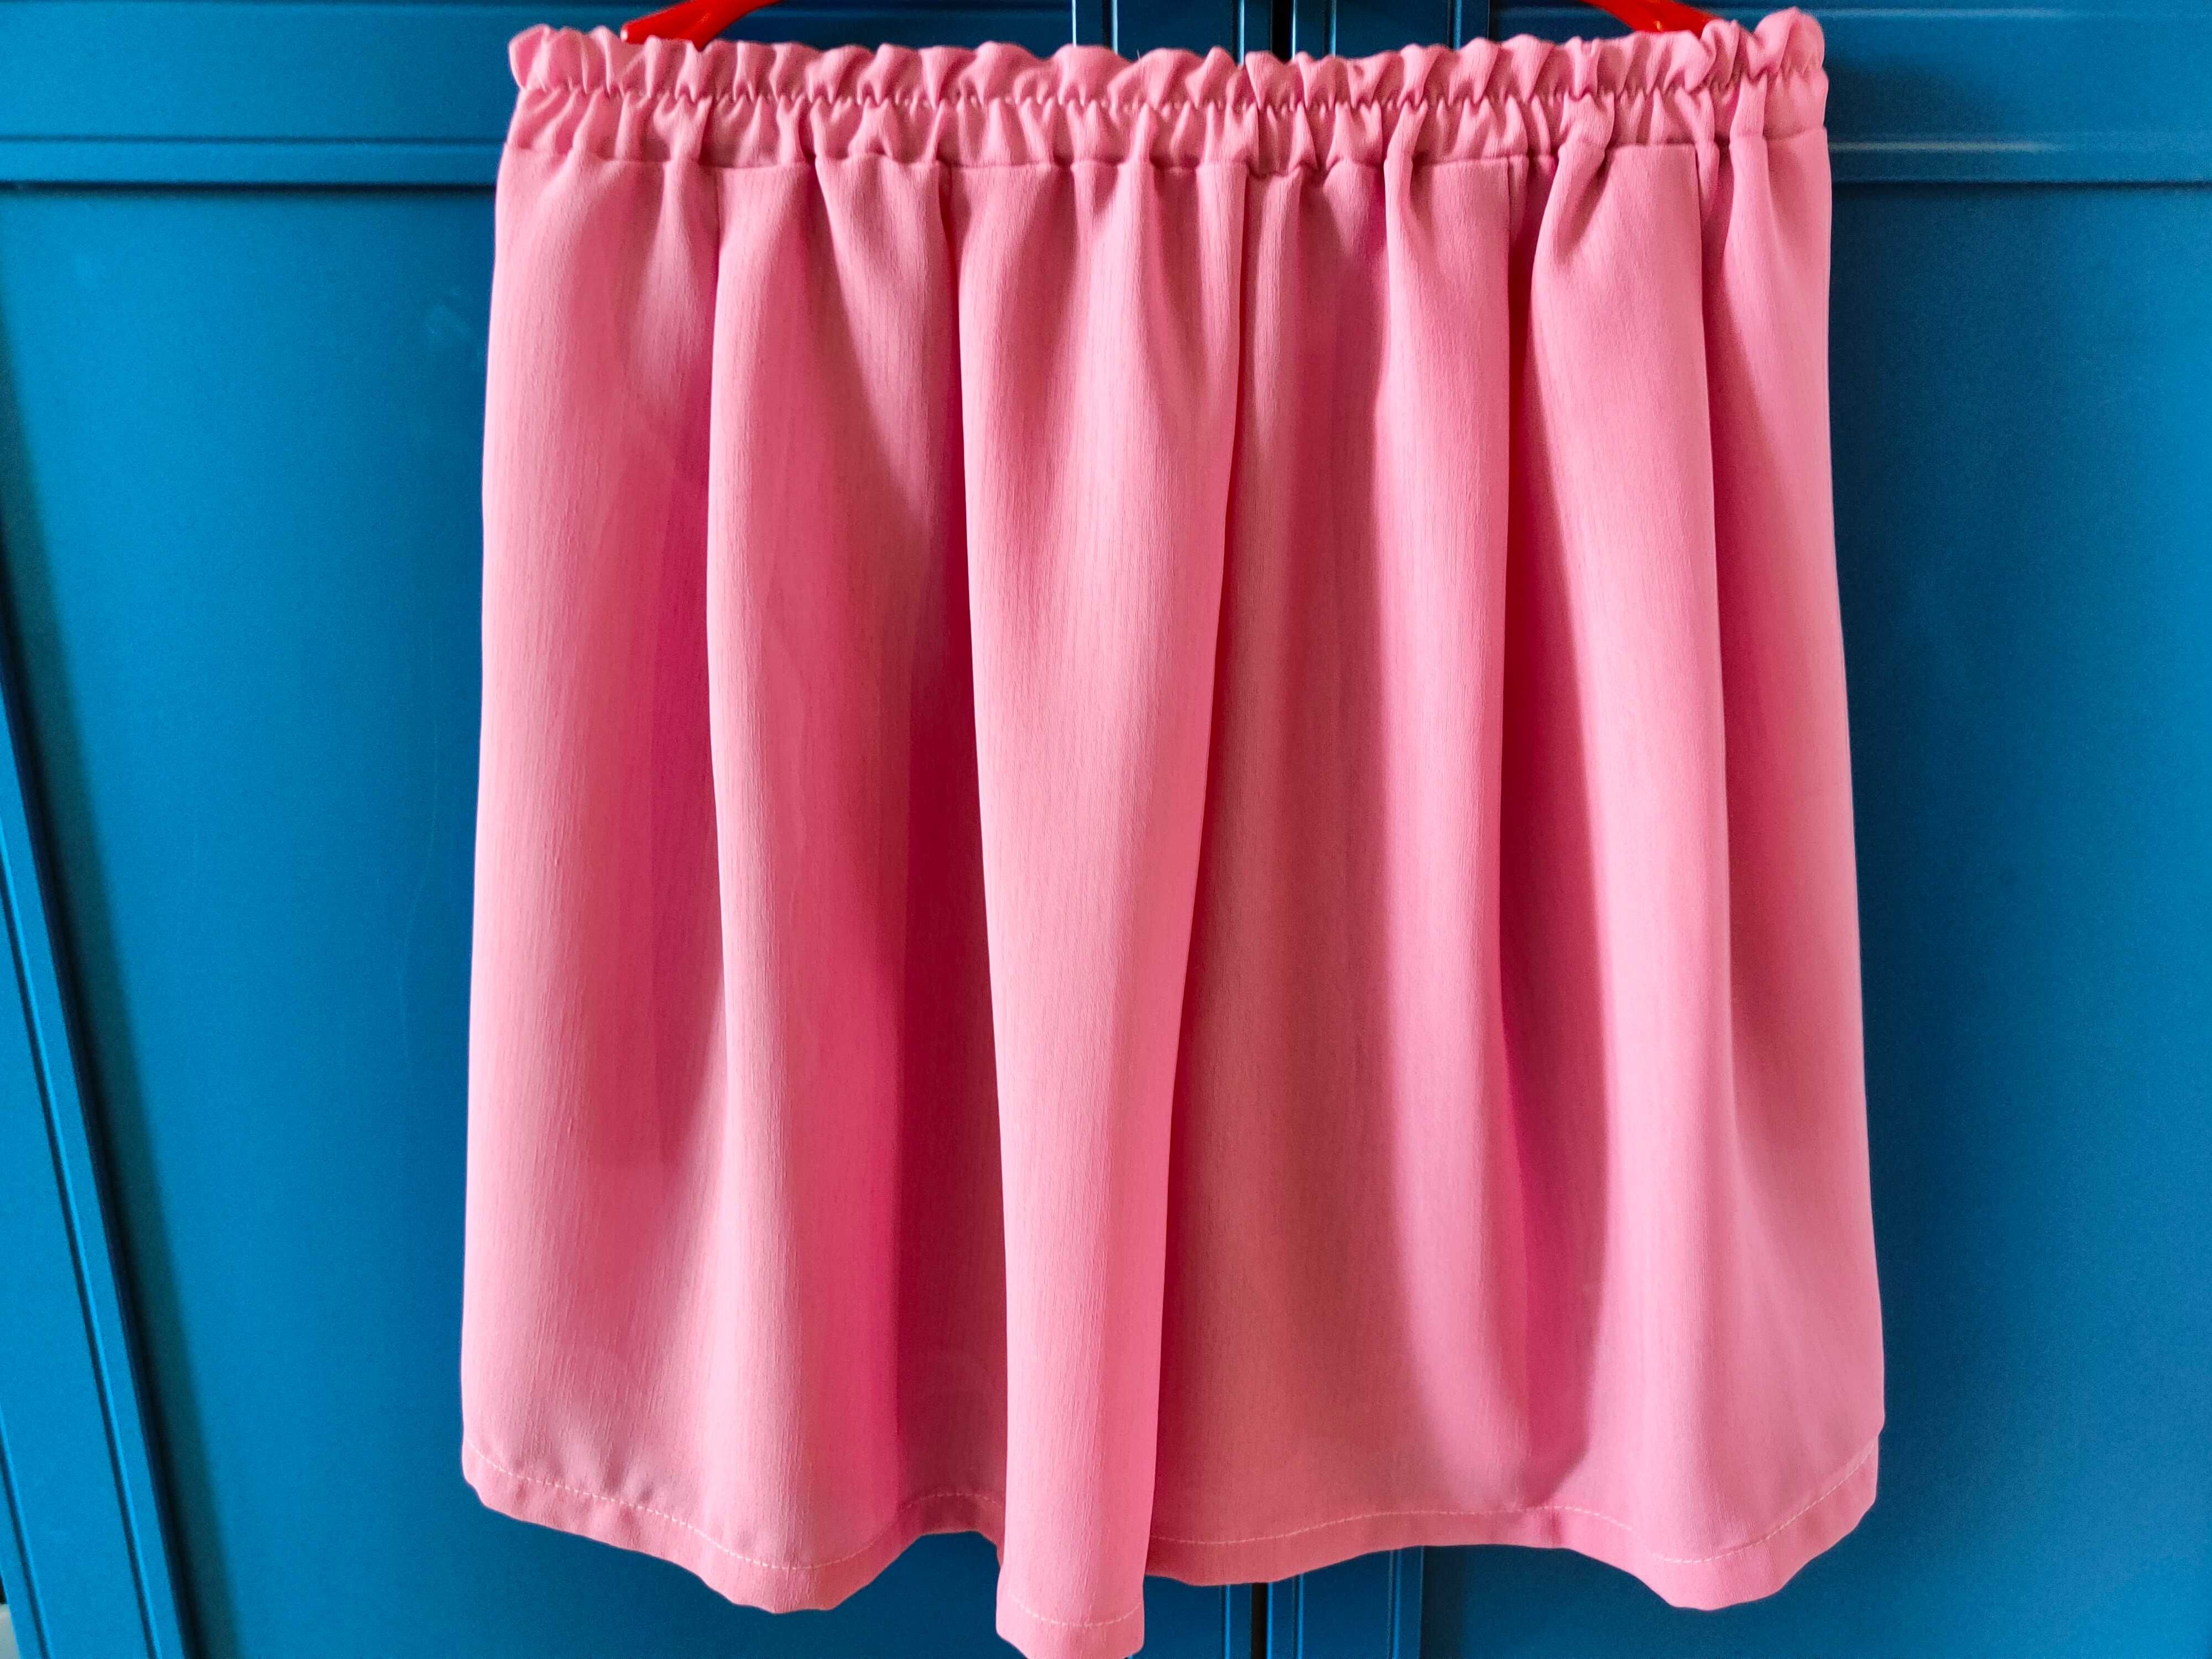 krótkie spodenki spódnica spódnico-spodnie różowe 40/42